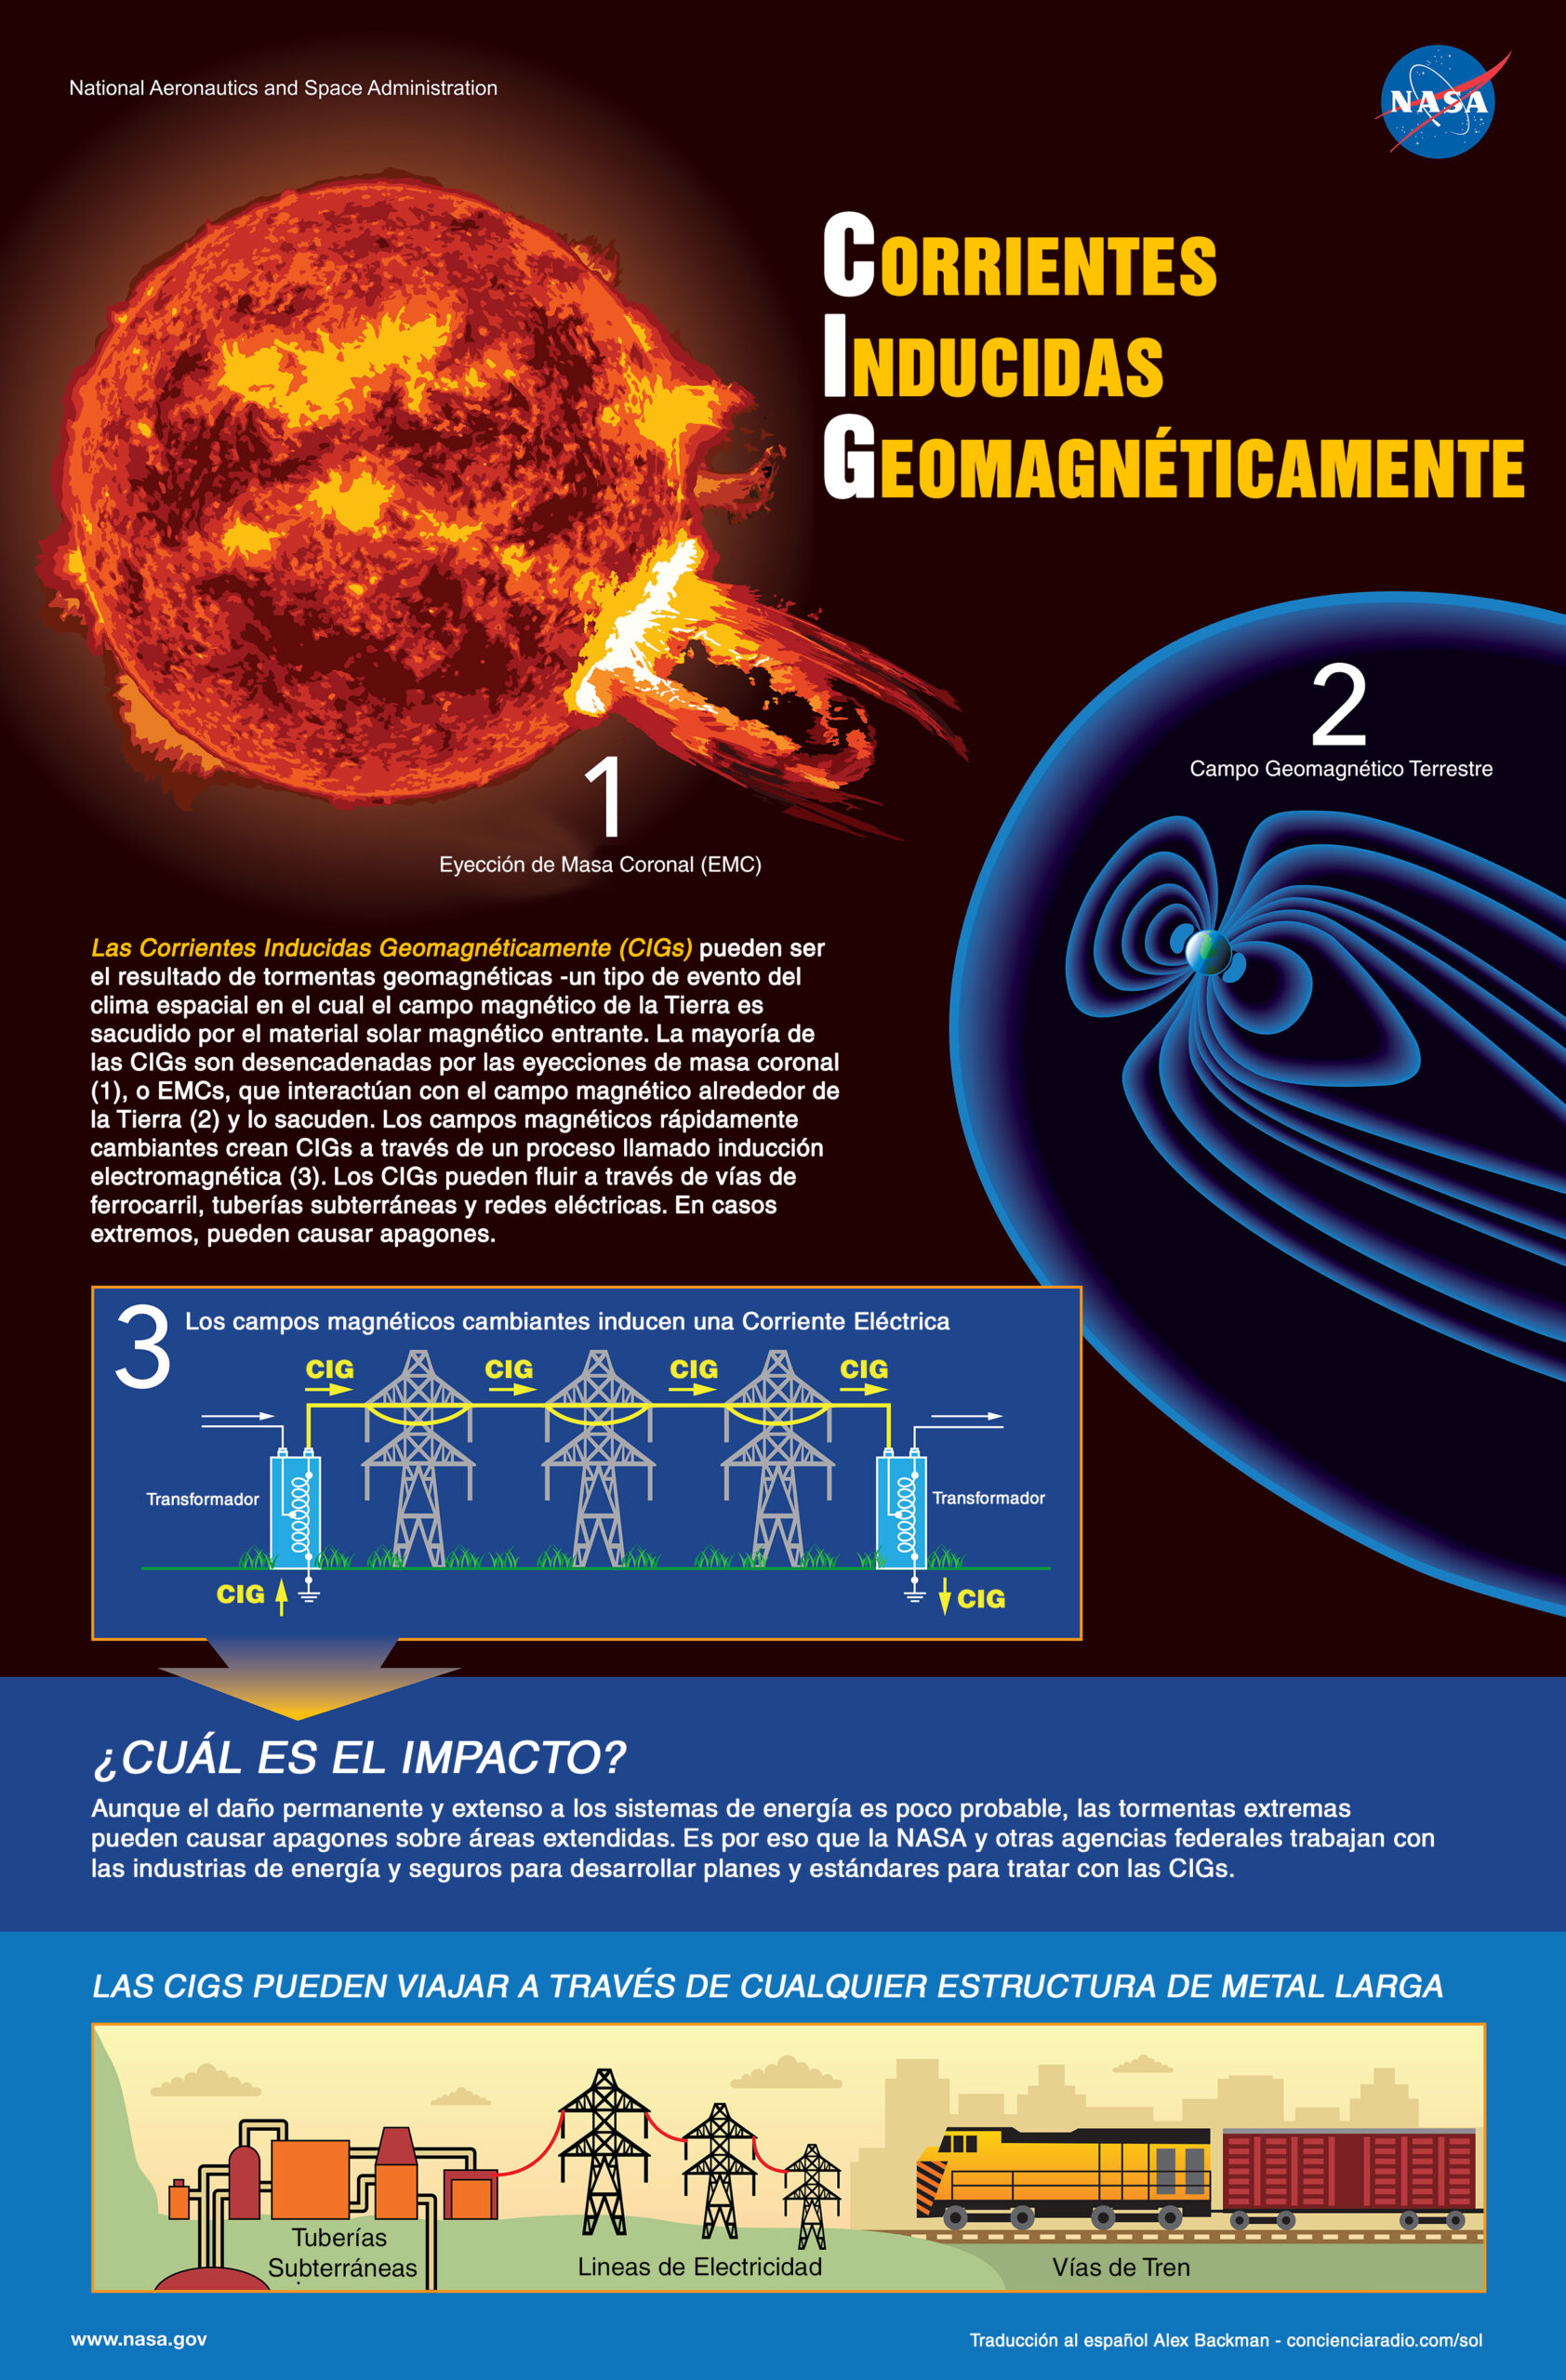 CIGS - Corrientes Inducidas Geomagnéticamente, NASA